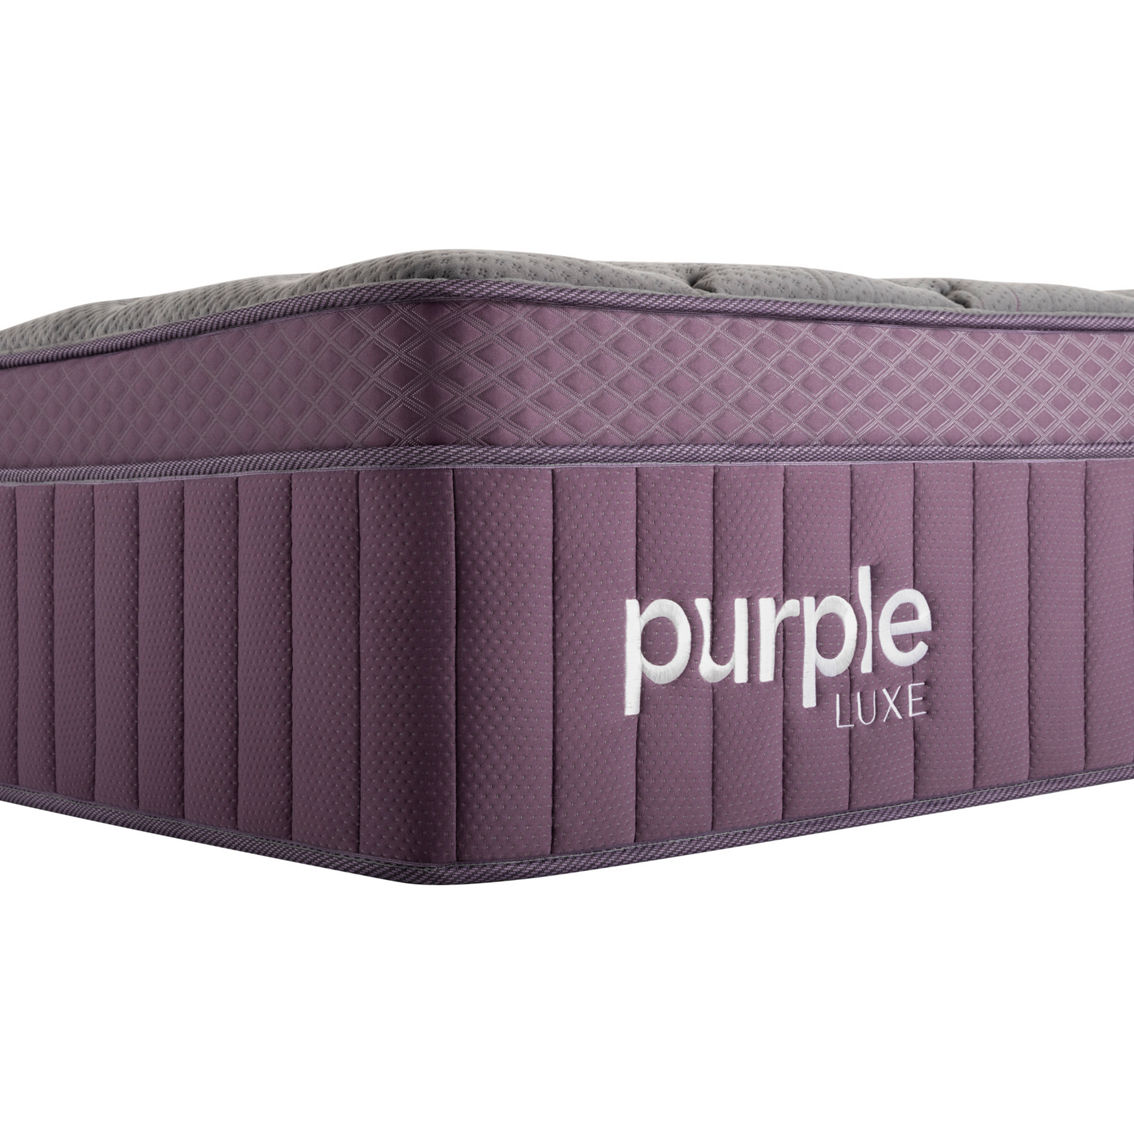 Purple Rejuvenate Premier Mattress - Image 3 of 6